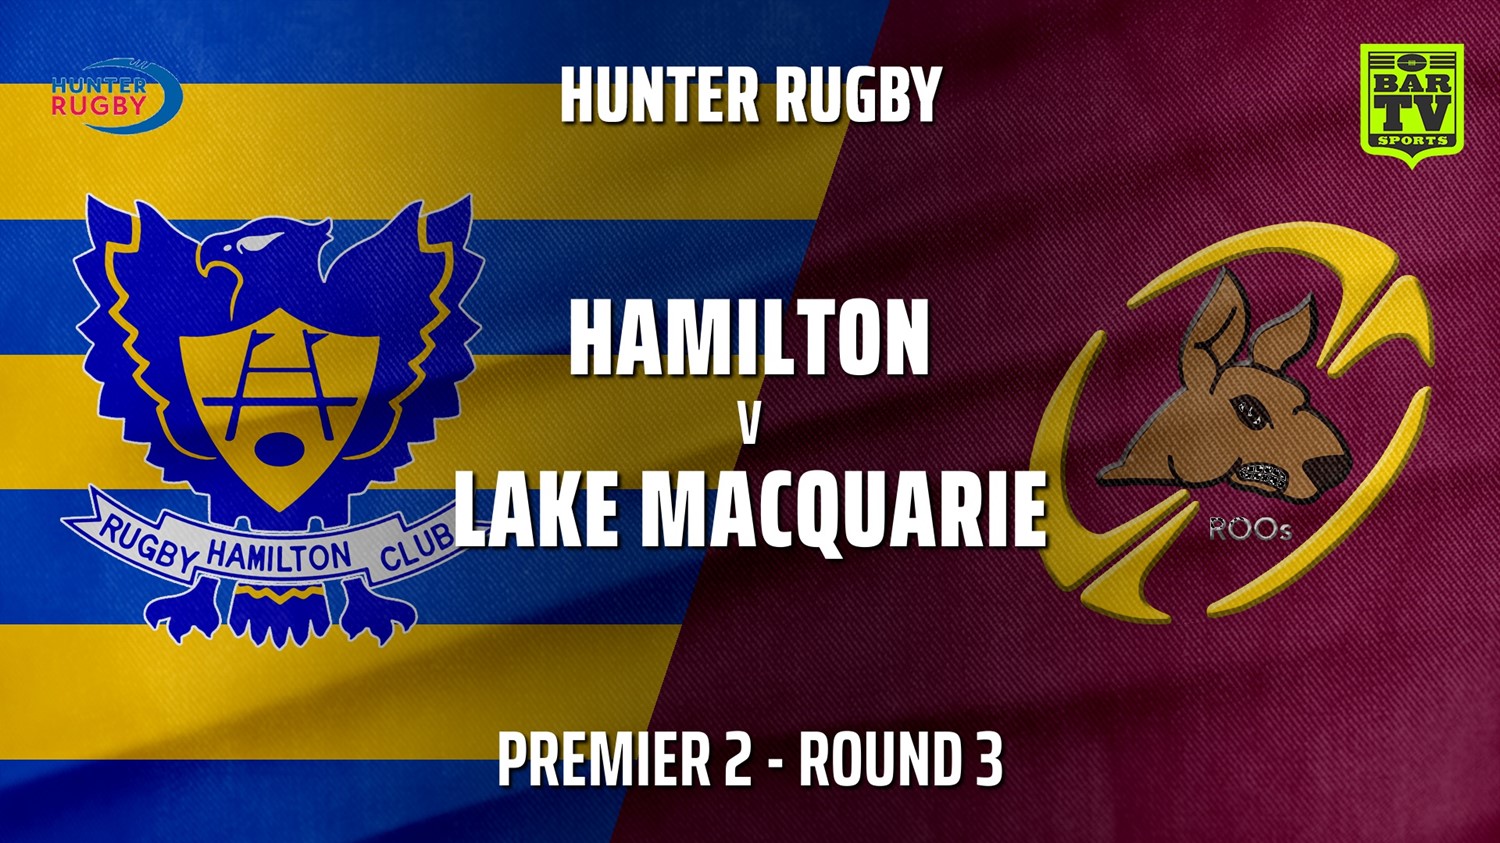 210501-HRU Round 3 - Premier 2 - Hamilton Hawks v Lake Macquarie Slate Image